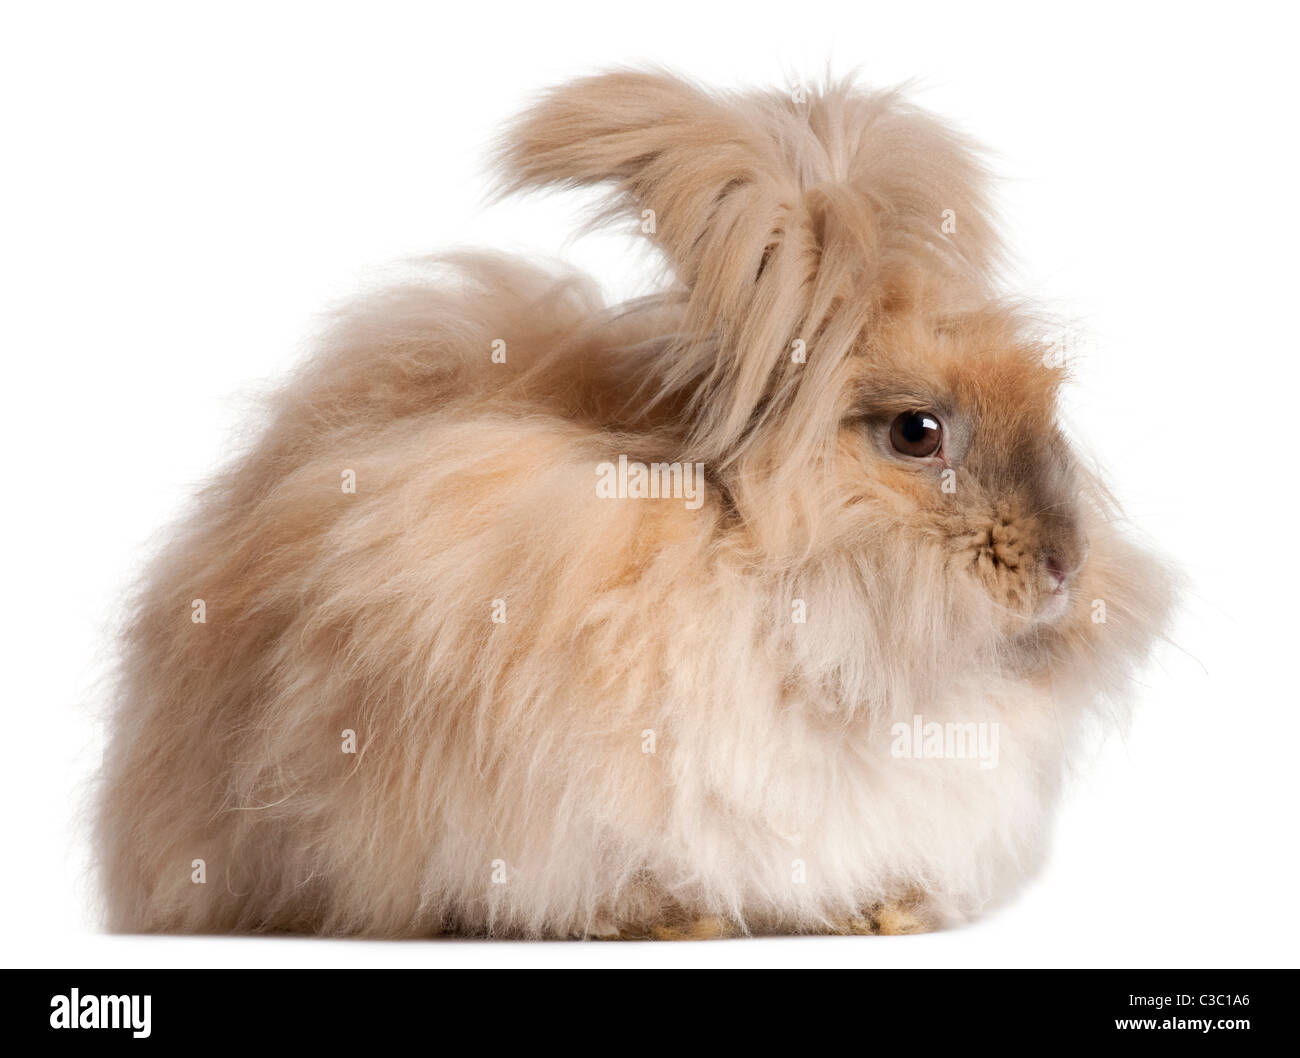 The angora rabbit -Fotos und -Bildmaterial in hoher Auflösung – Alamy